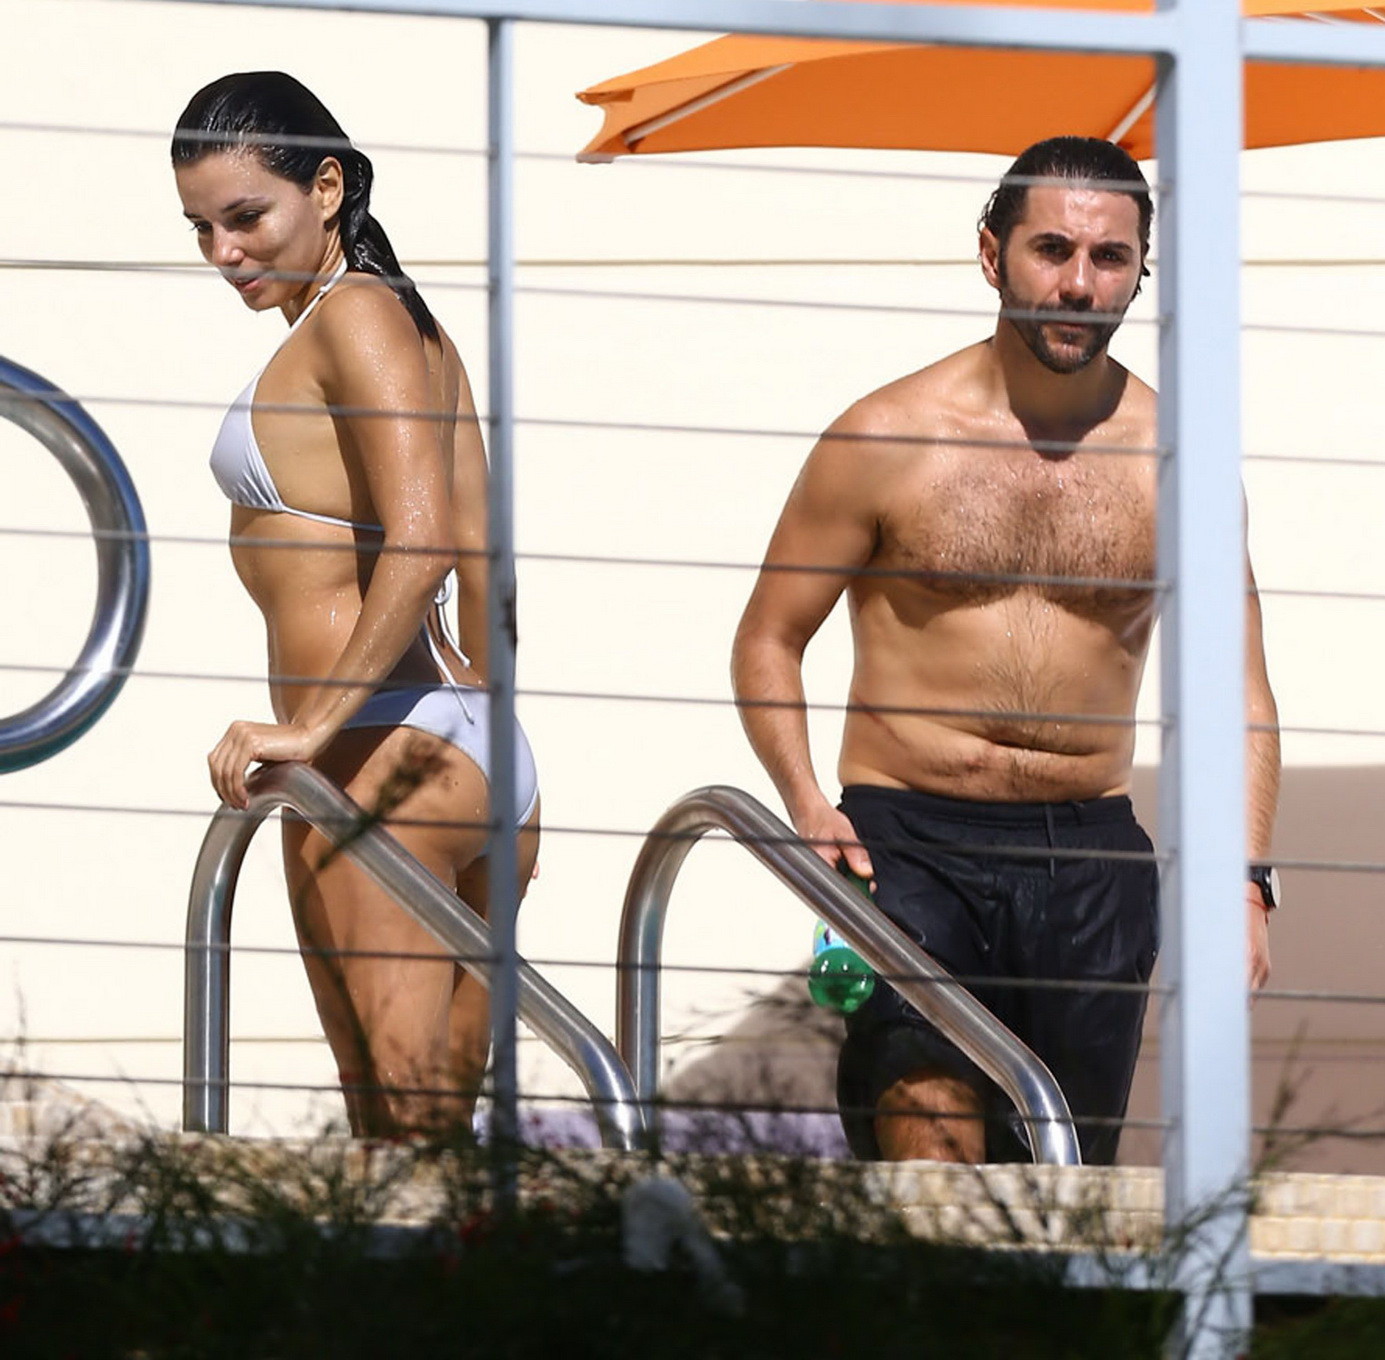 Eva longoria zeigt ihren Bikinikörper am Pool in Miami
 #75178855